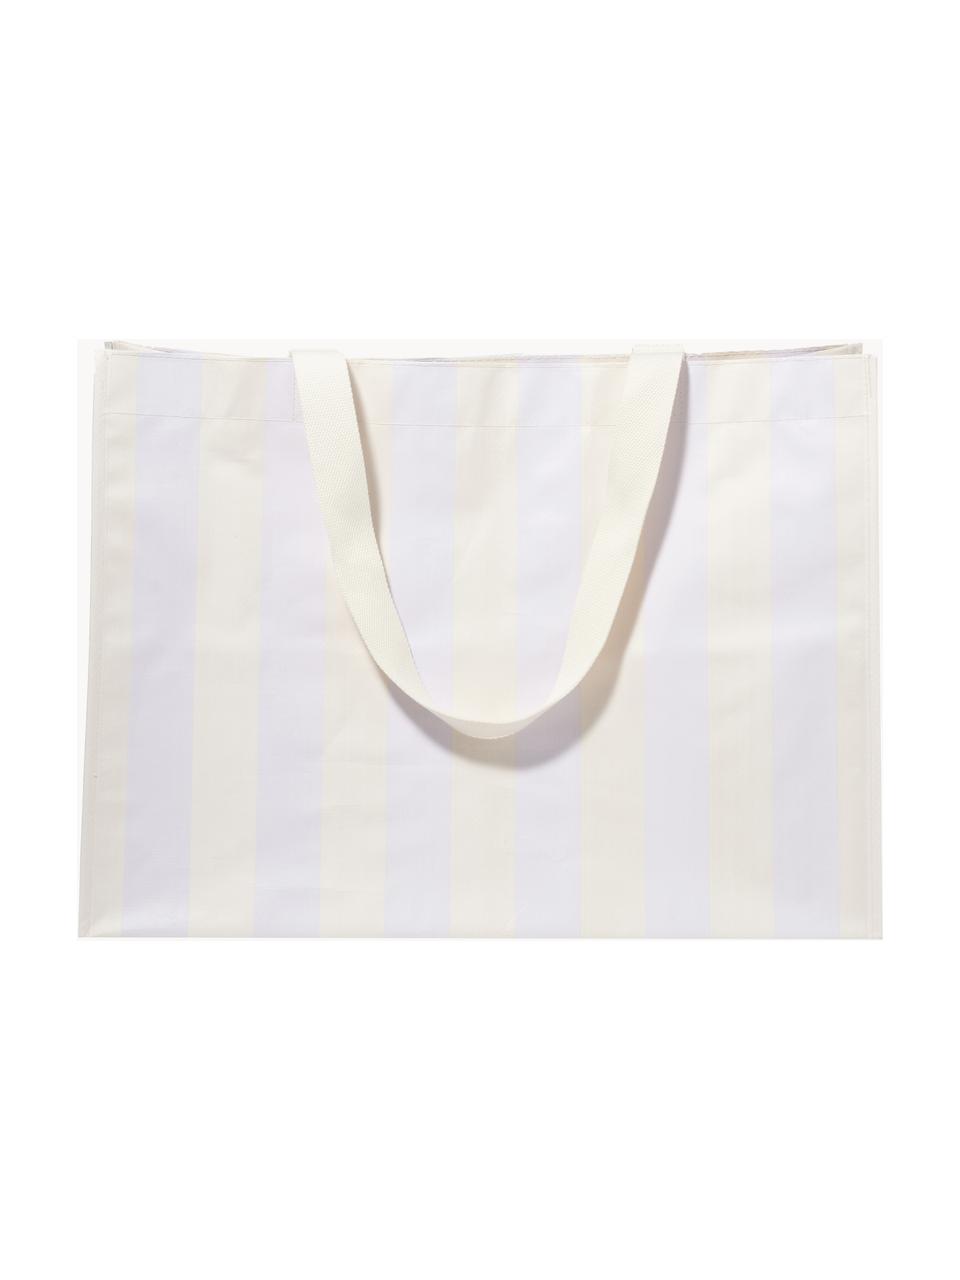 Borsa da spiaggia Rio Sun, Polipropilene, Bianco crema, lavanda, Larg. 58 x Alt. 43 cm